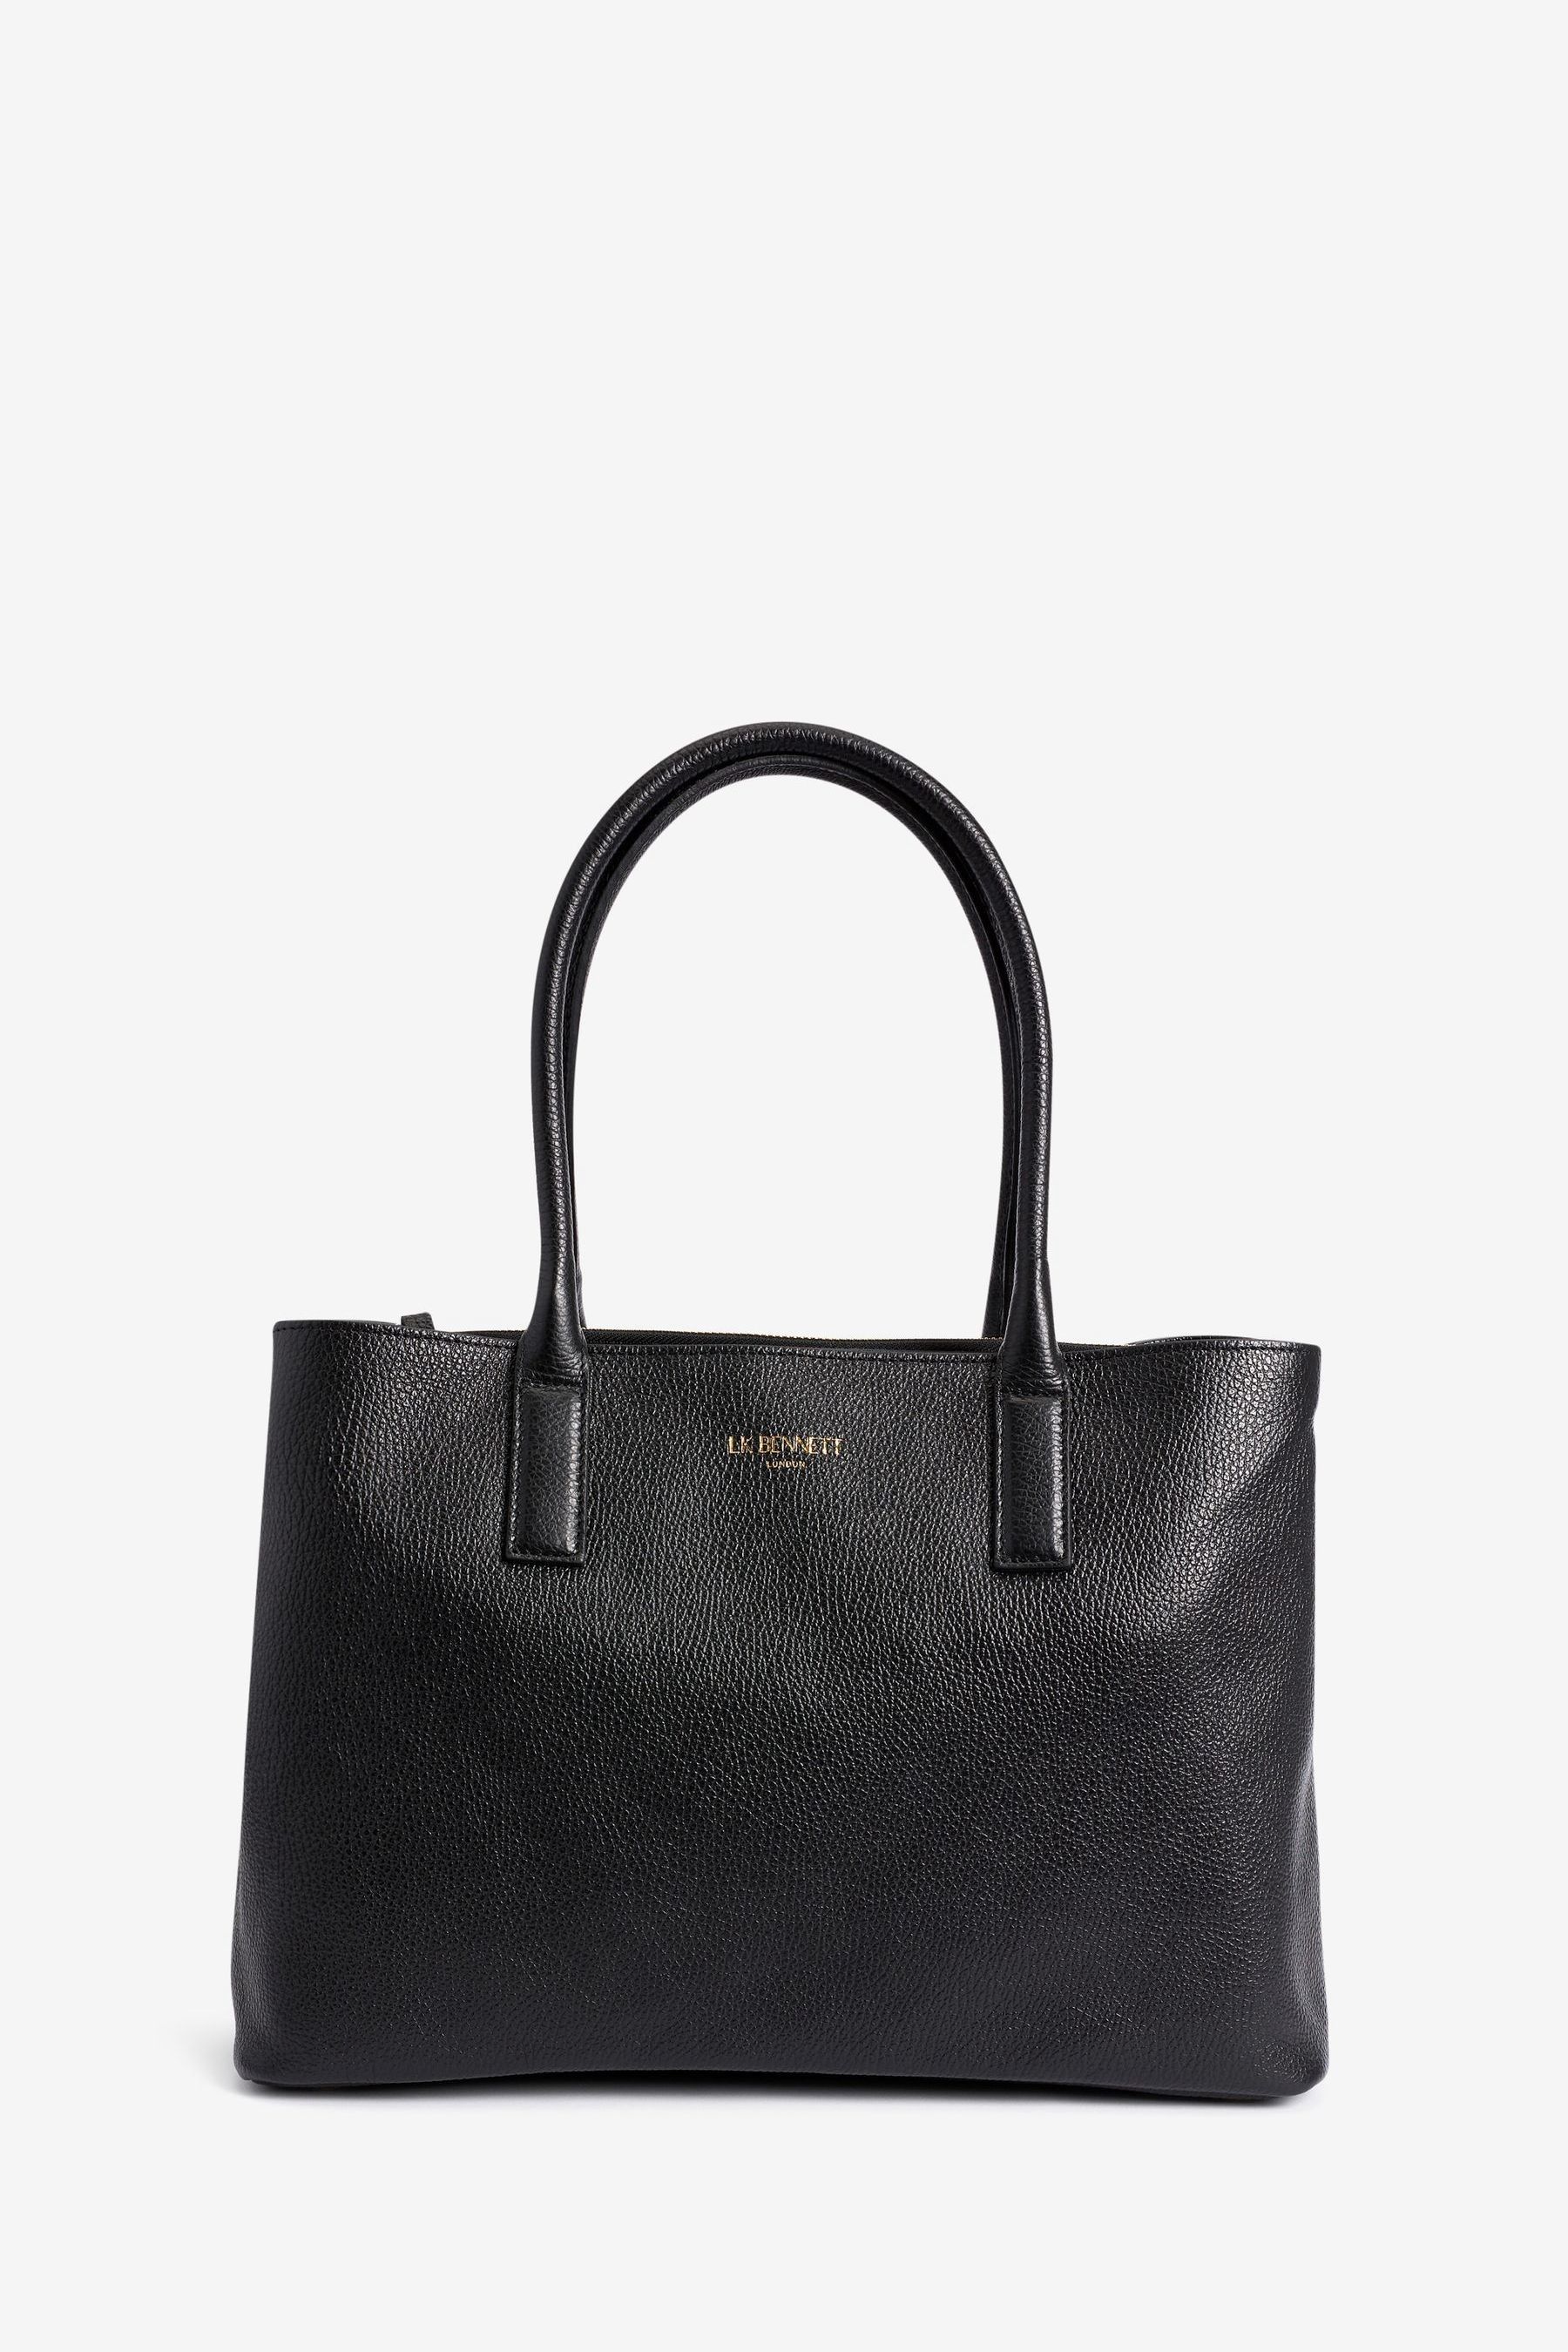 Buy LK Bennett Black Lillian Leather Tote Bag from the Next UK online shop